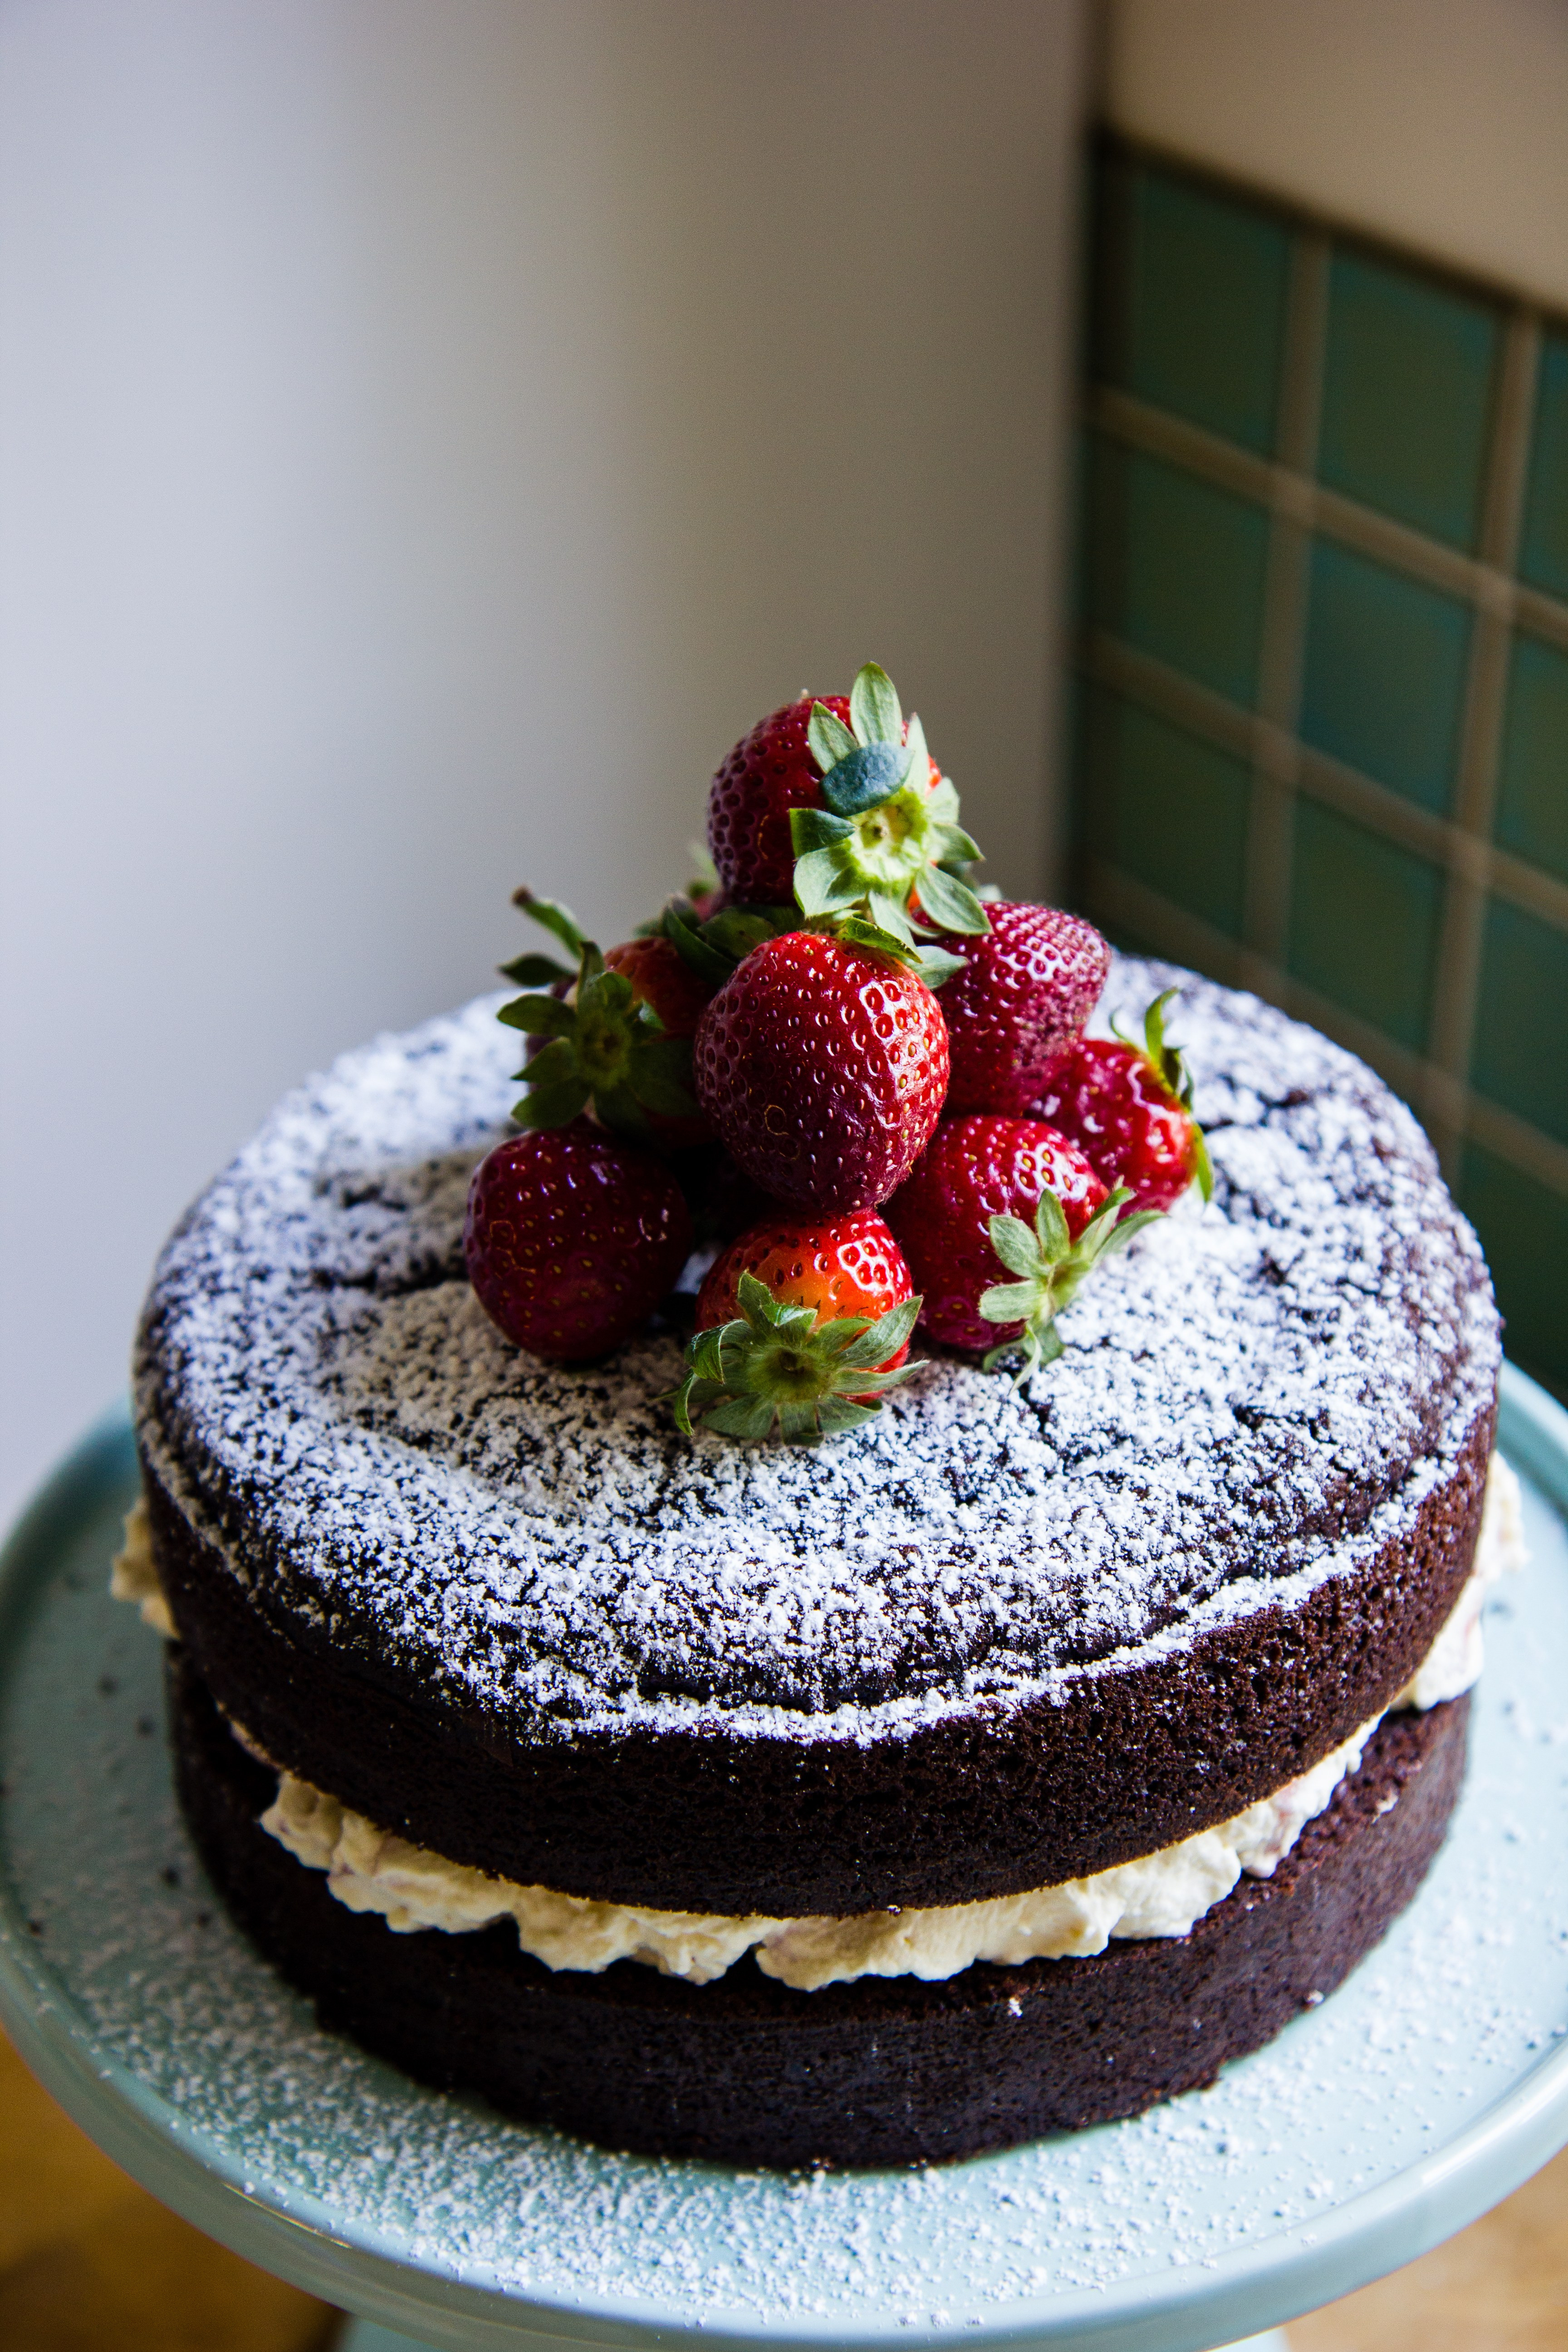 Chocolate Cake With Strawberries
 Chocolate celebration cake with strawberries and cream